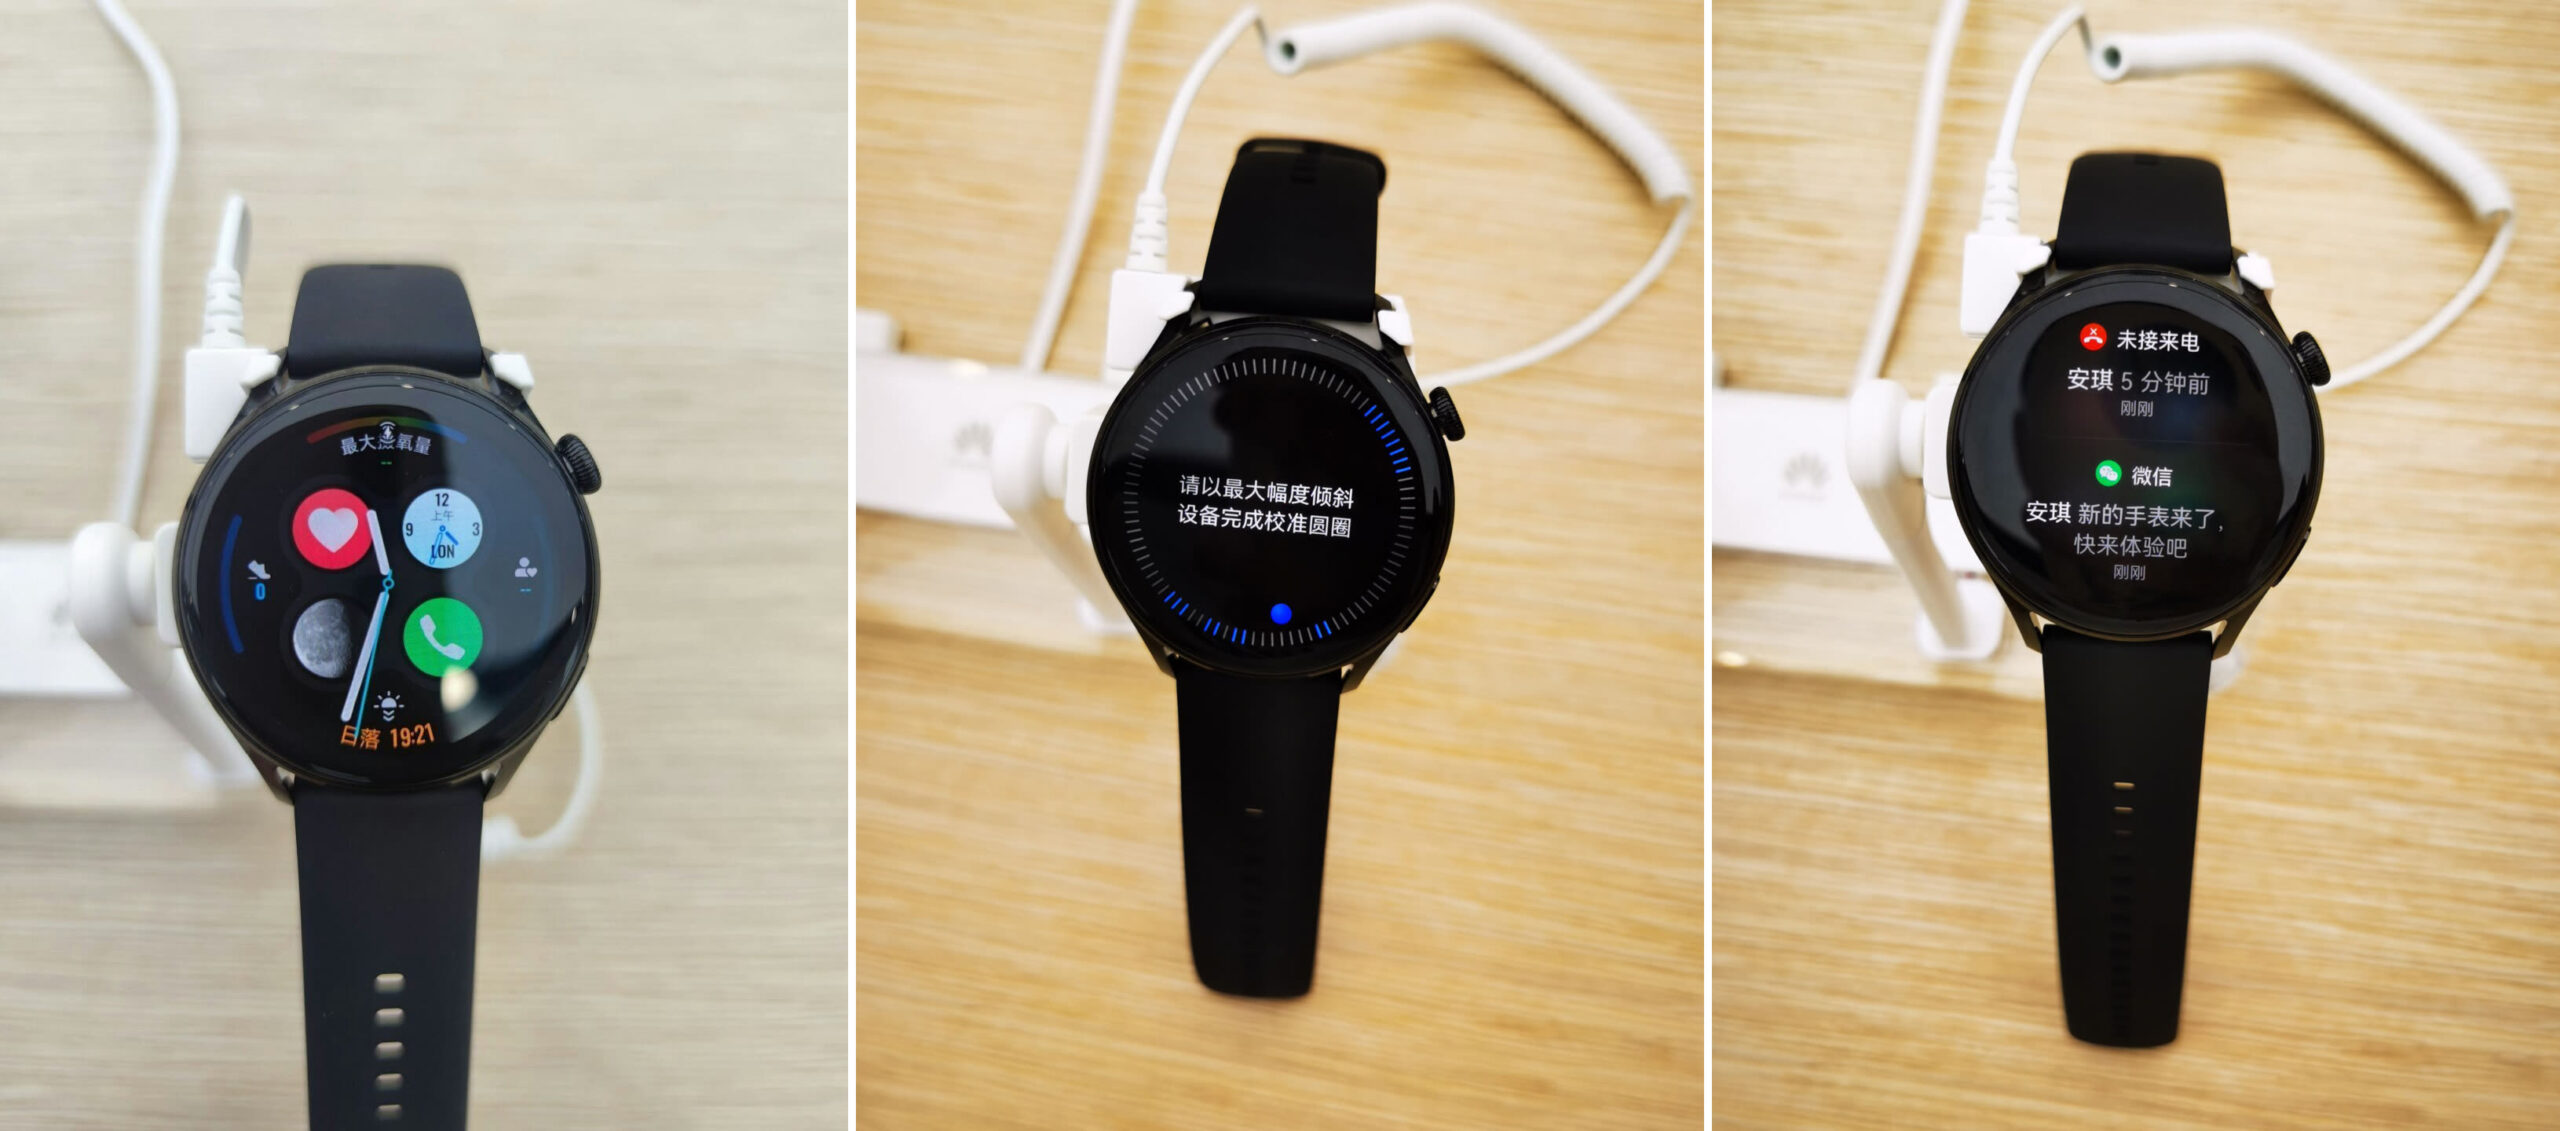 Dopo gli smartphone, Huawei integrerà Harmony OS nei suoi orologi